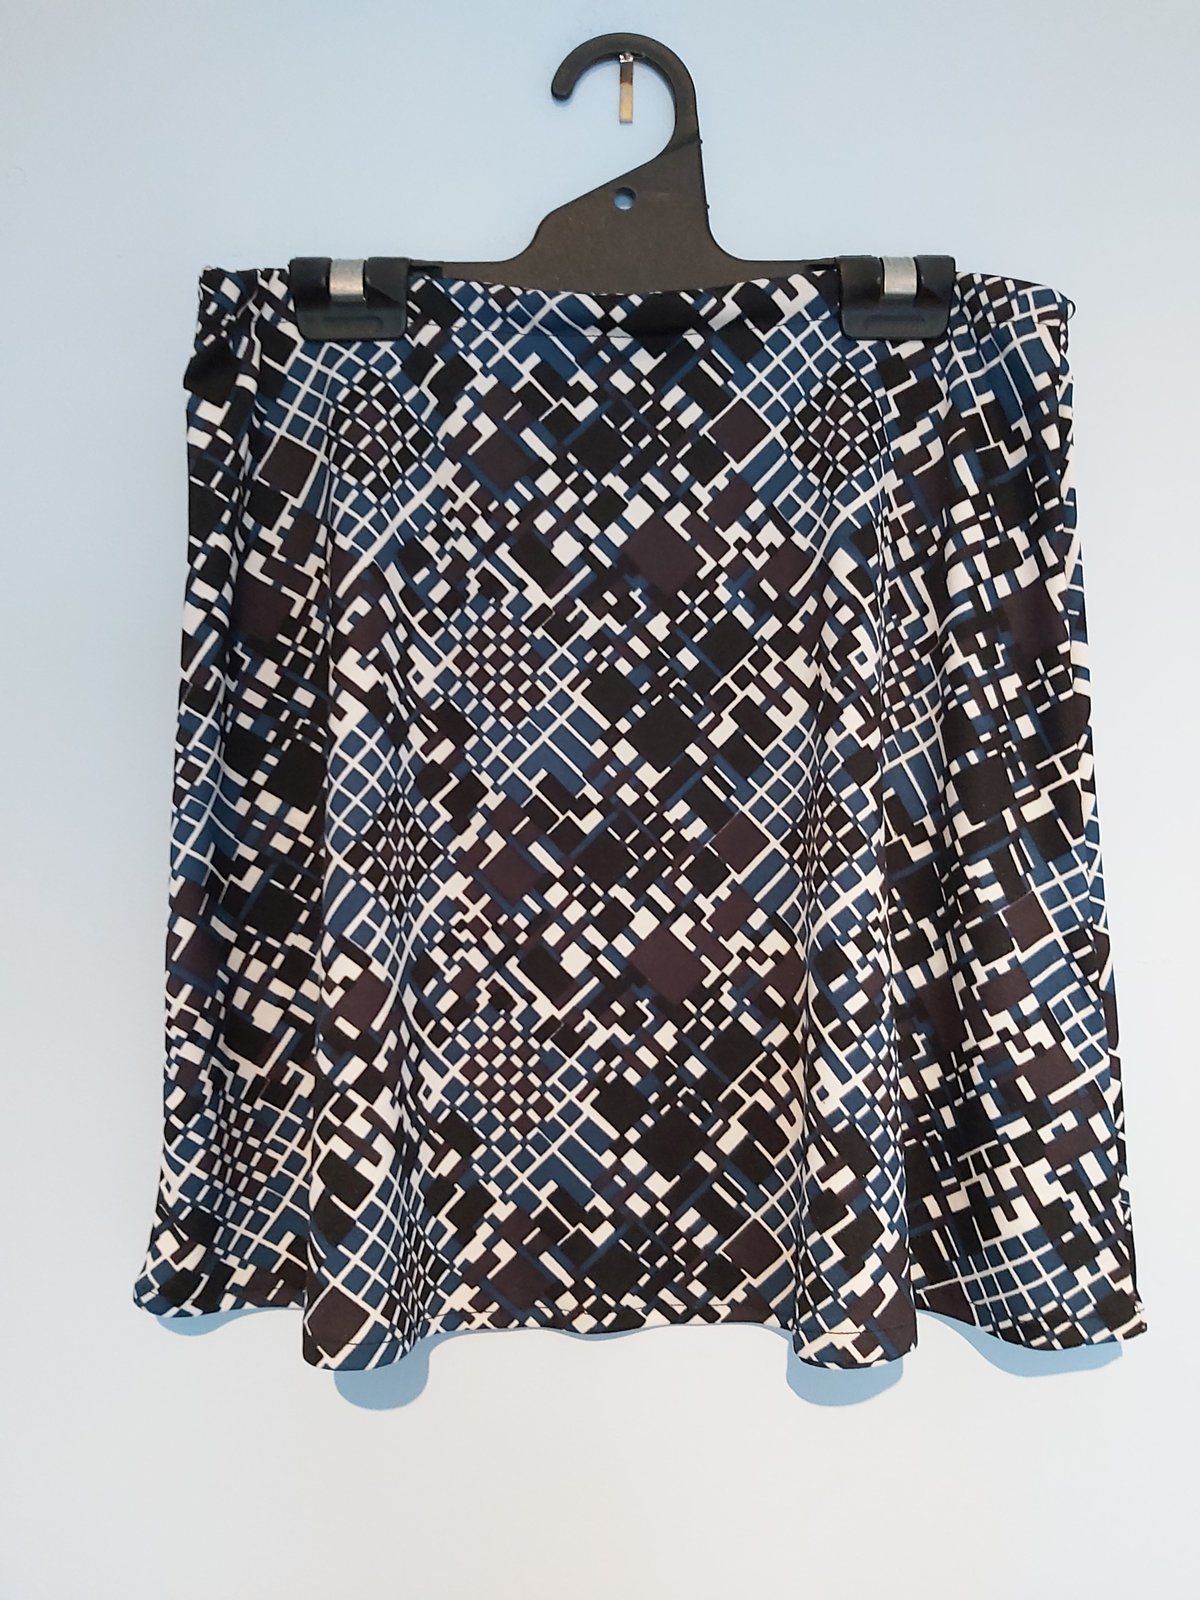 Image of Kat skirt - blue/black on cream print